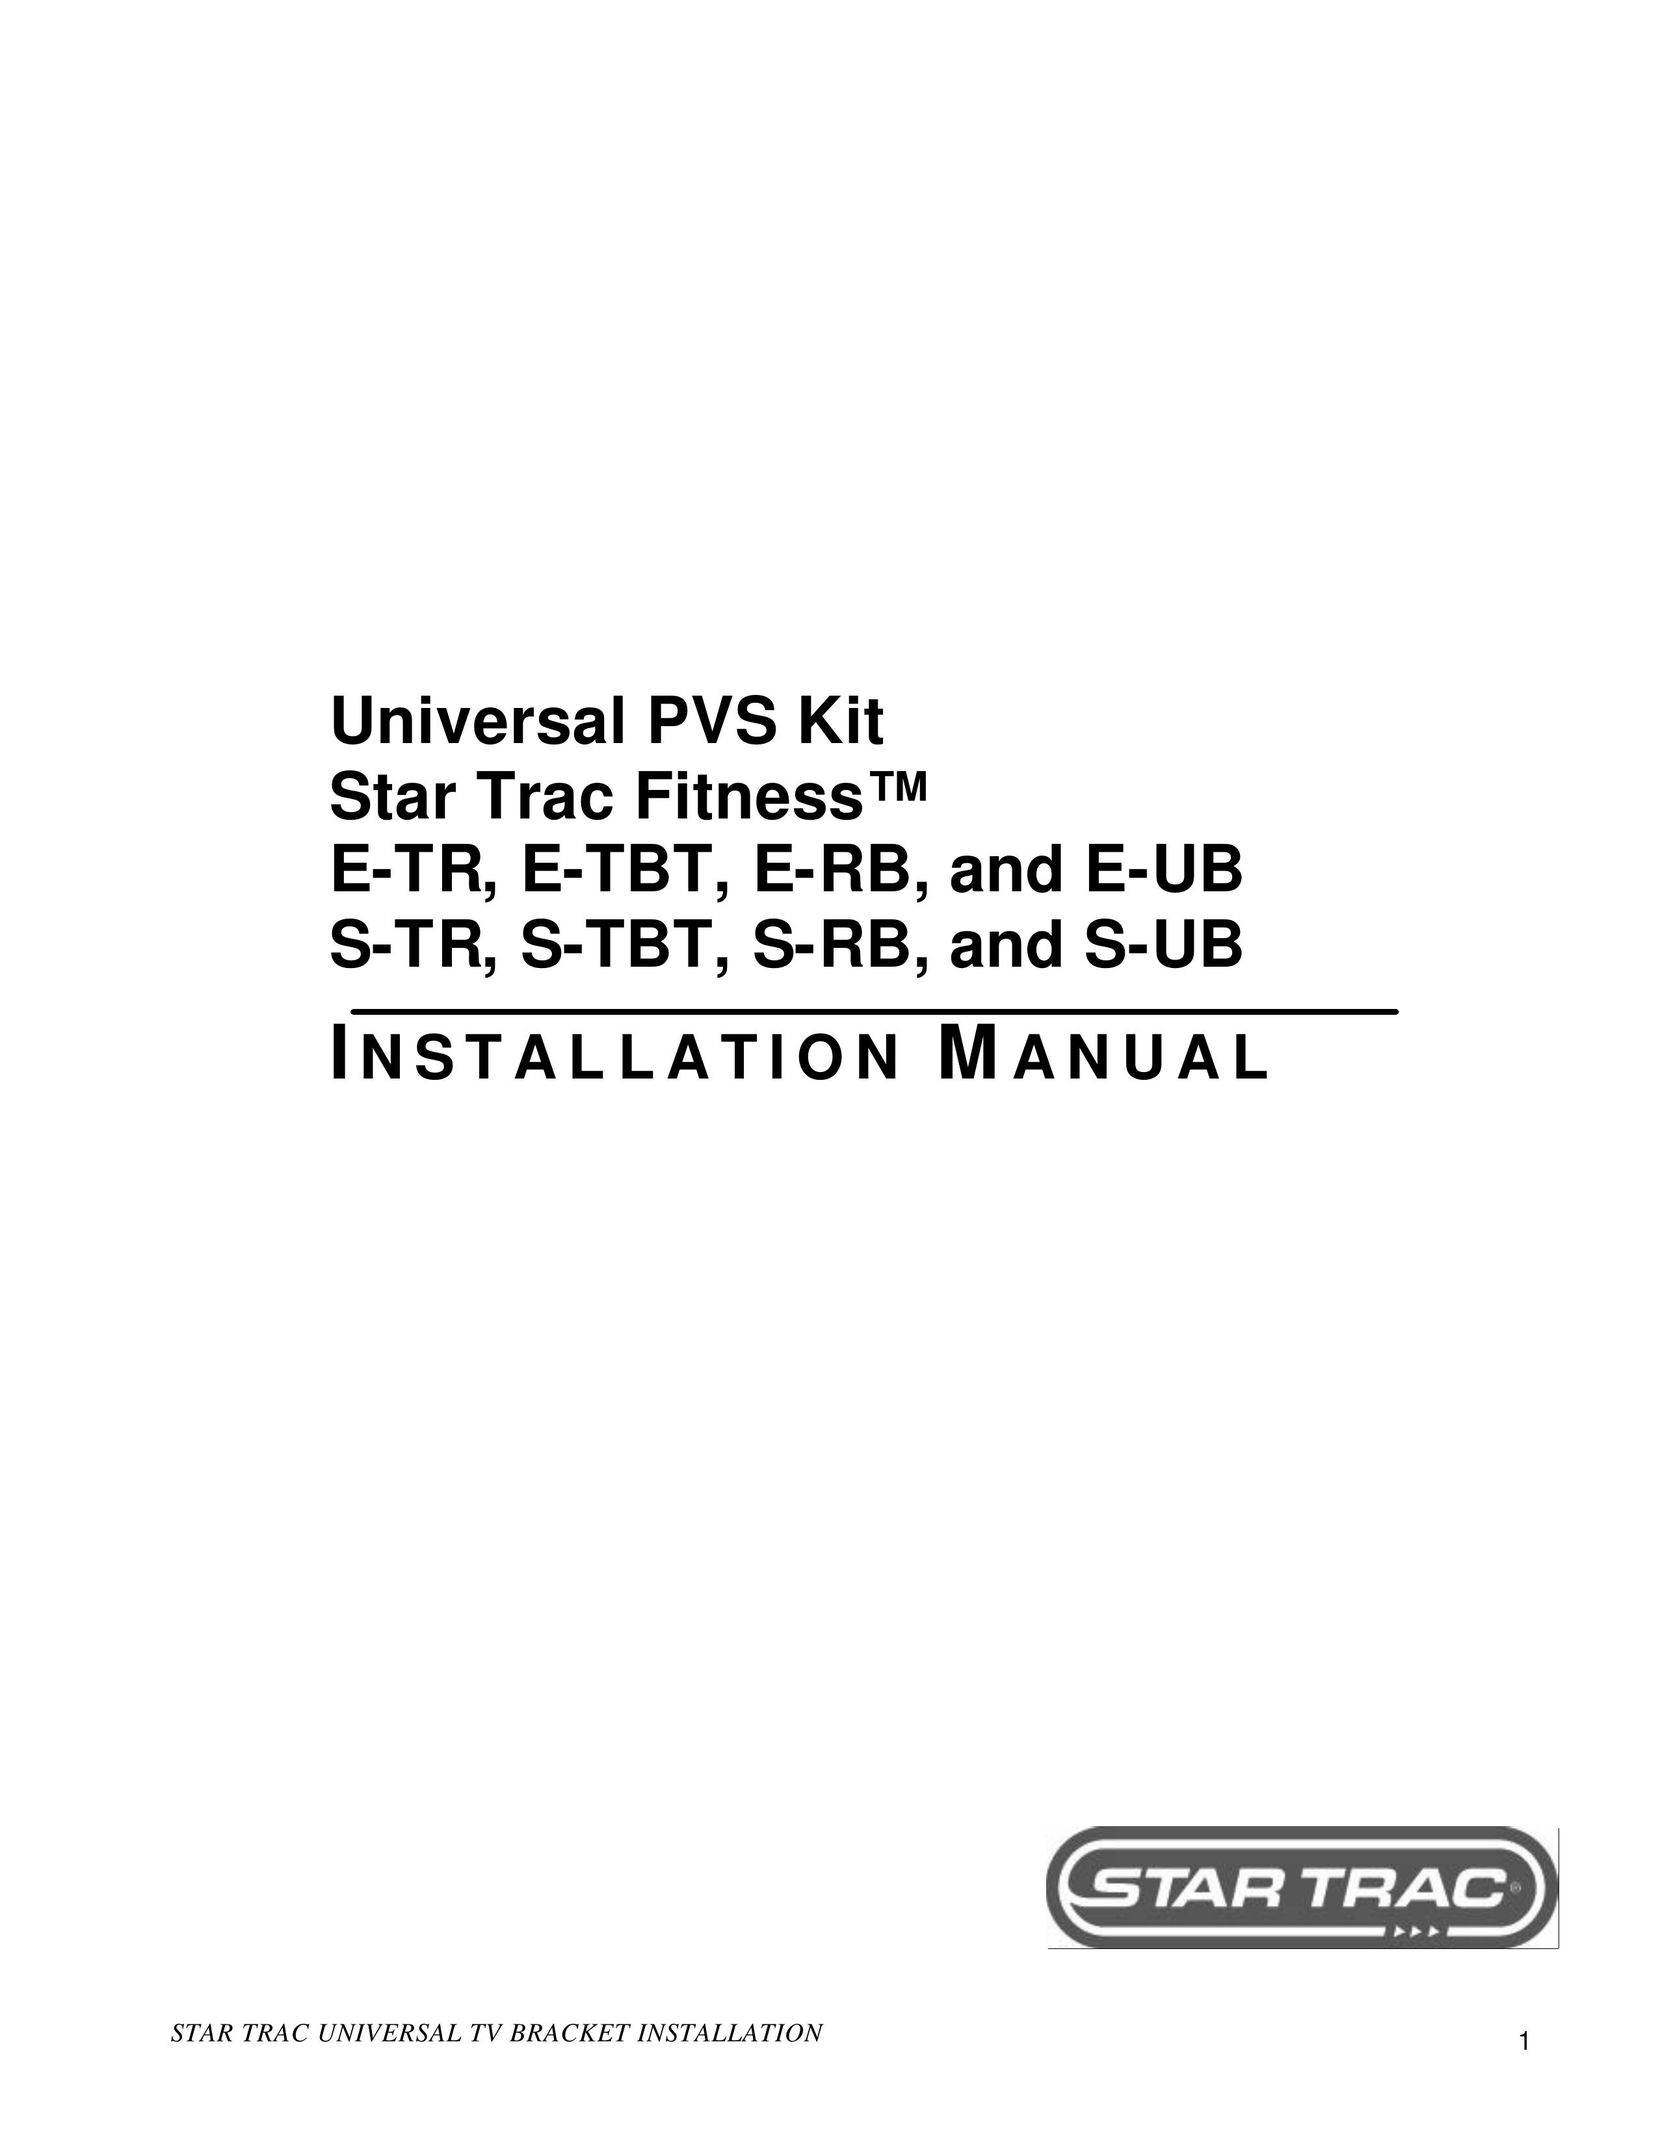 Star Trac E-RB Fitness Electronics User Manual